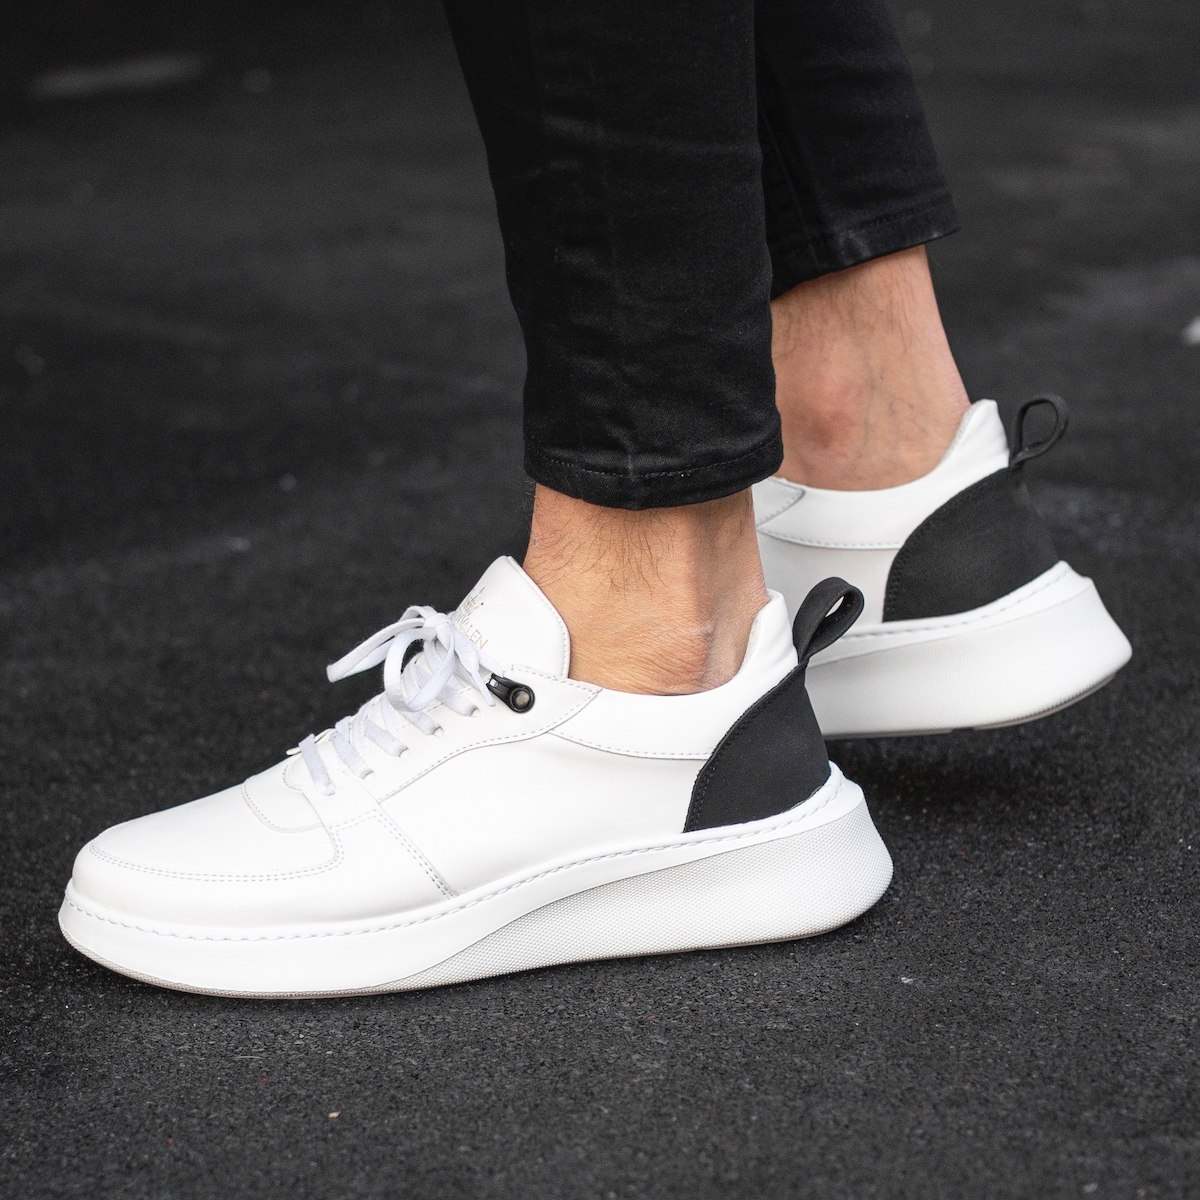 Urban Casual Sneakers Schuhe in schwarz - 4